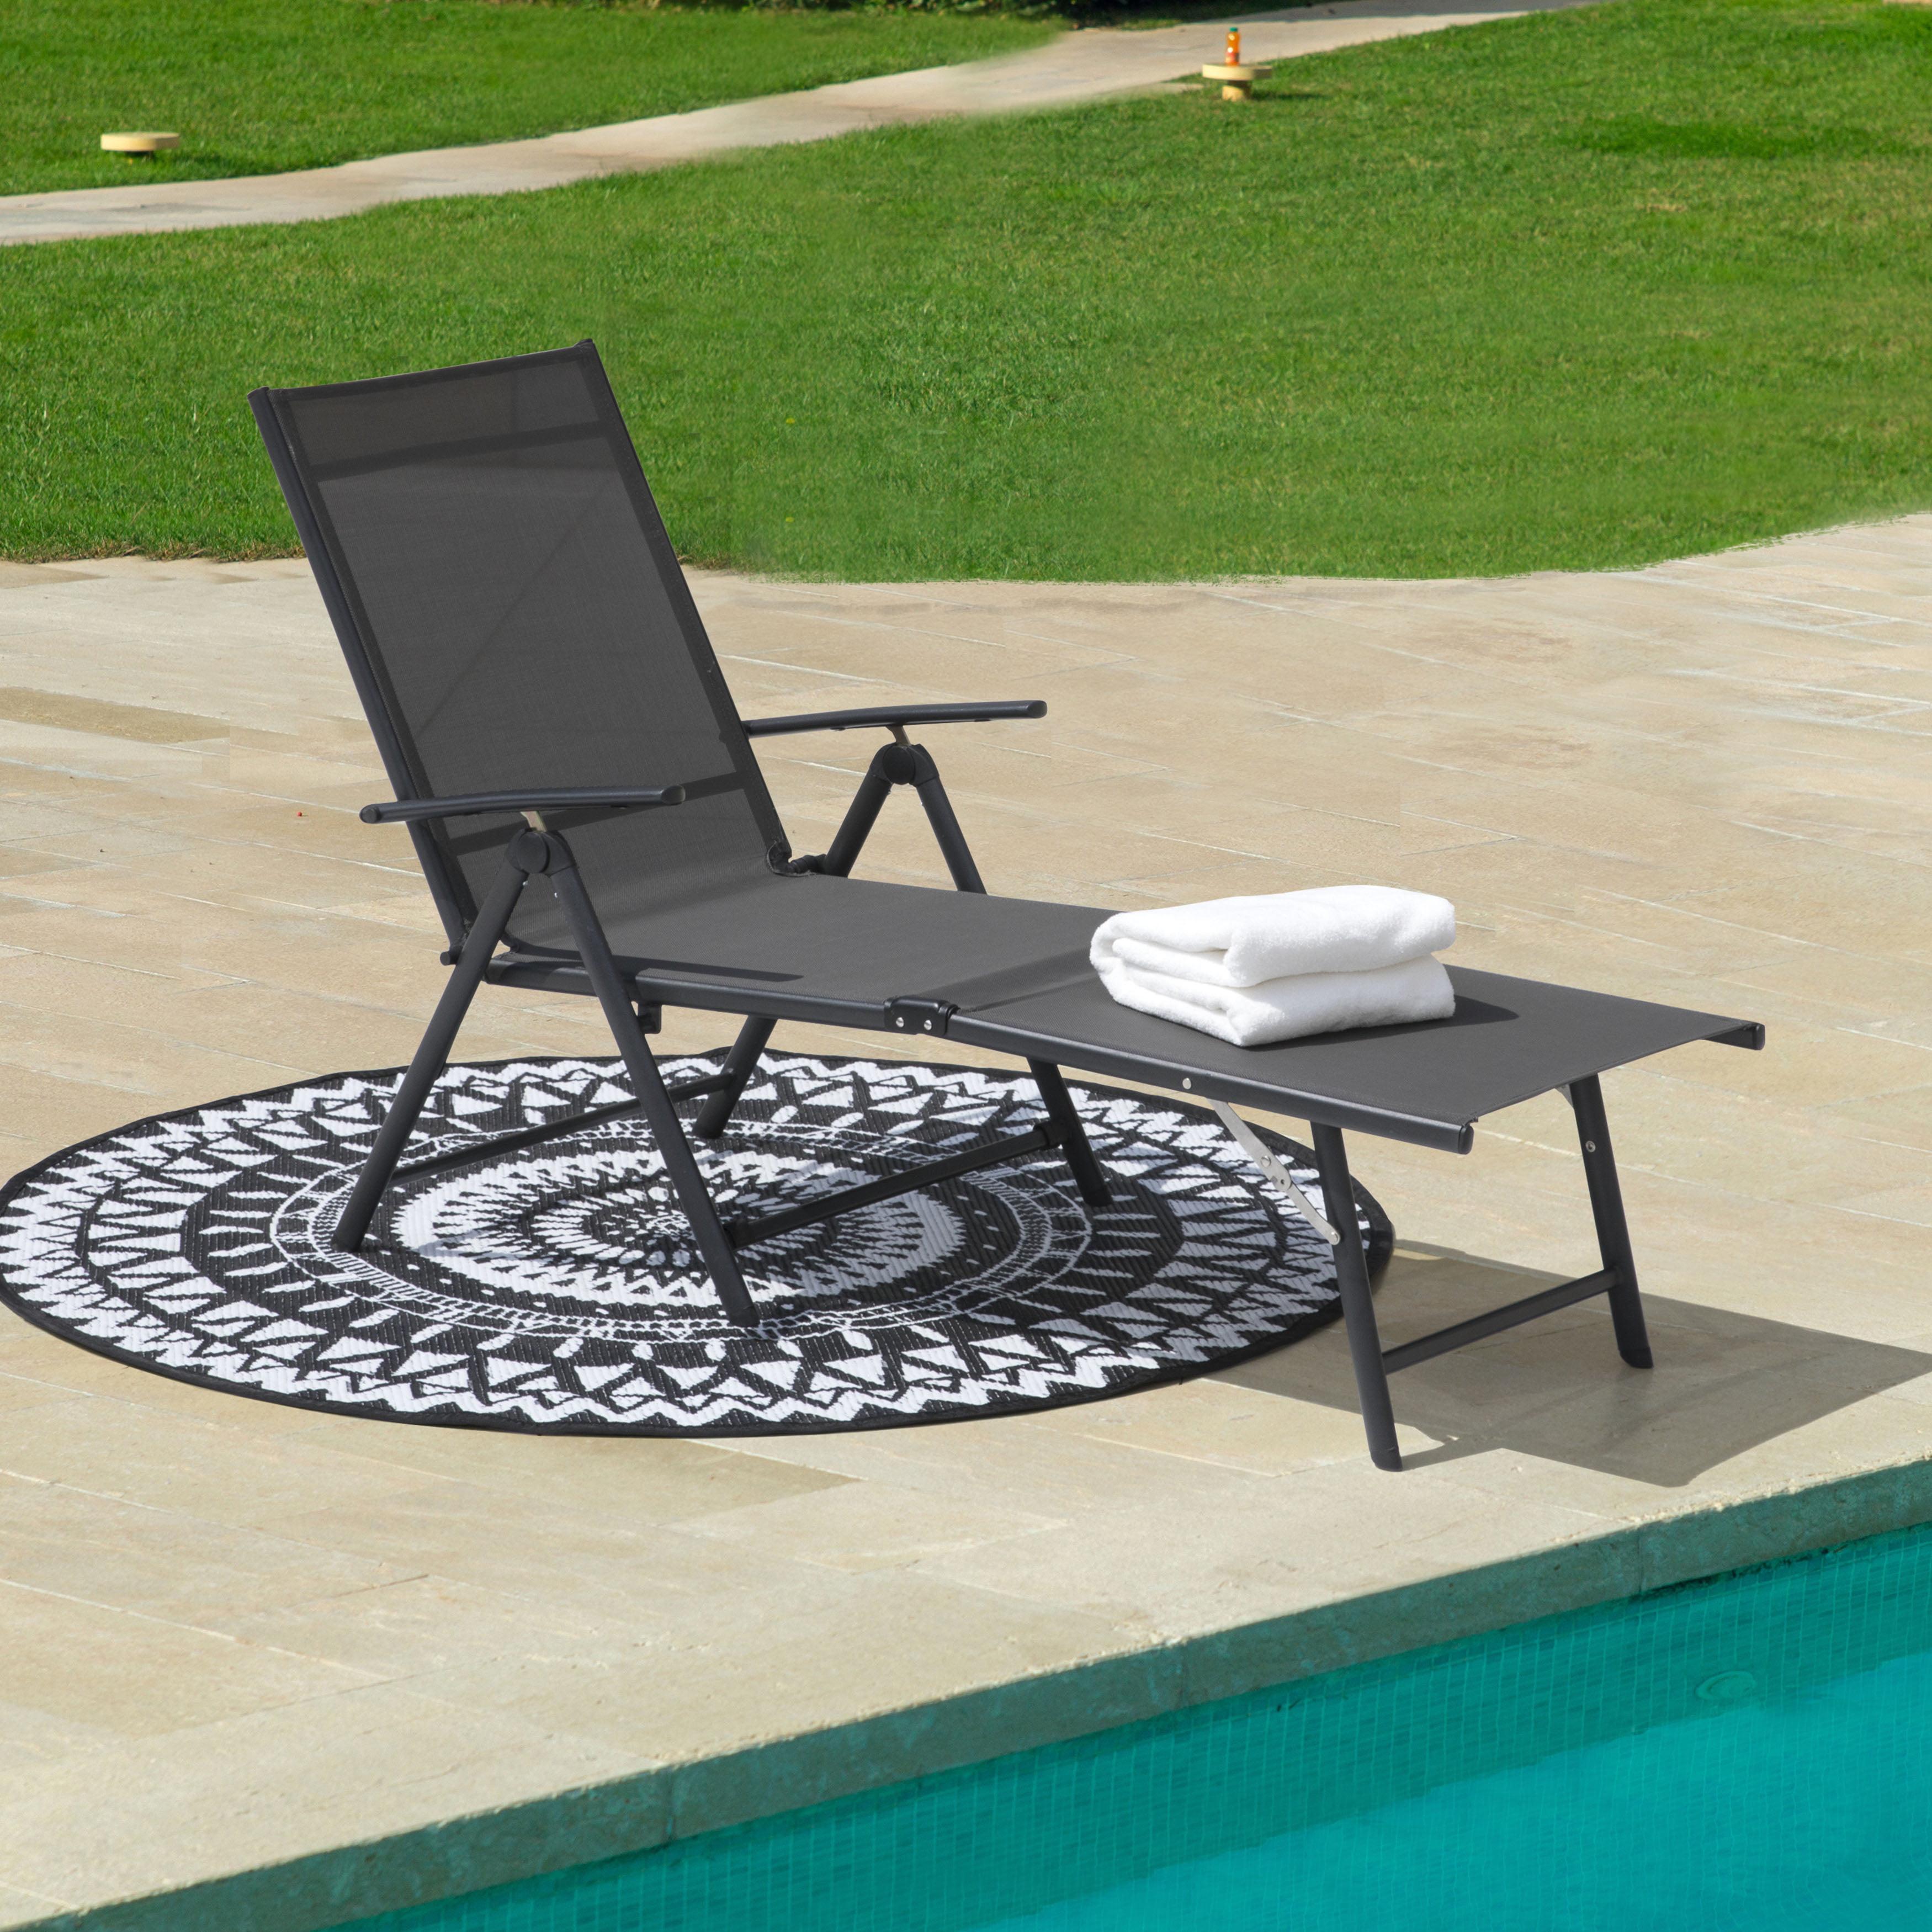 UBesGoo Folding Chaise Lounge Chair Patio Outdoor Pool Beach Lawn 